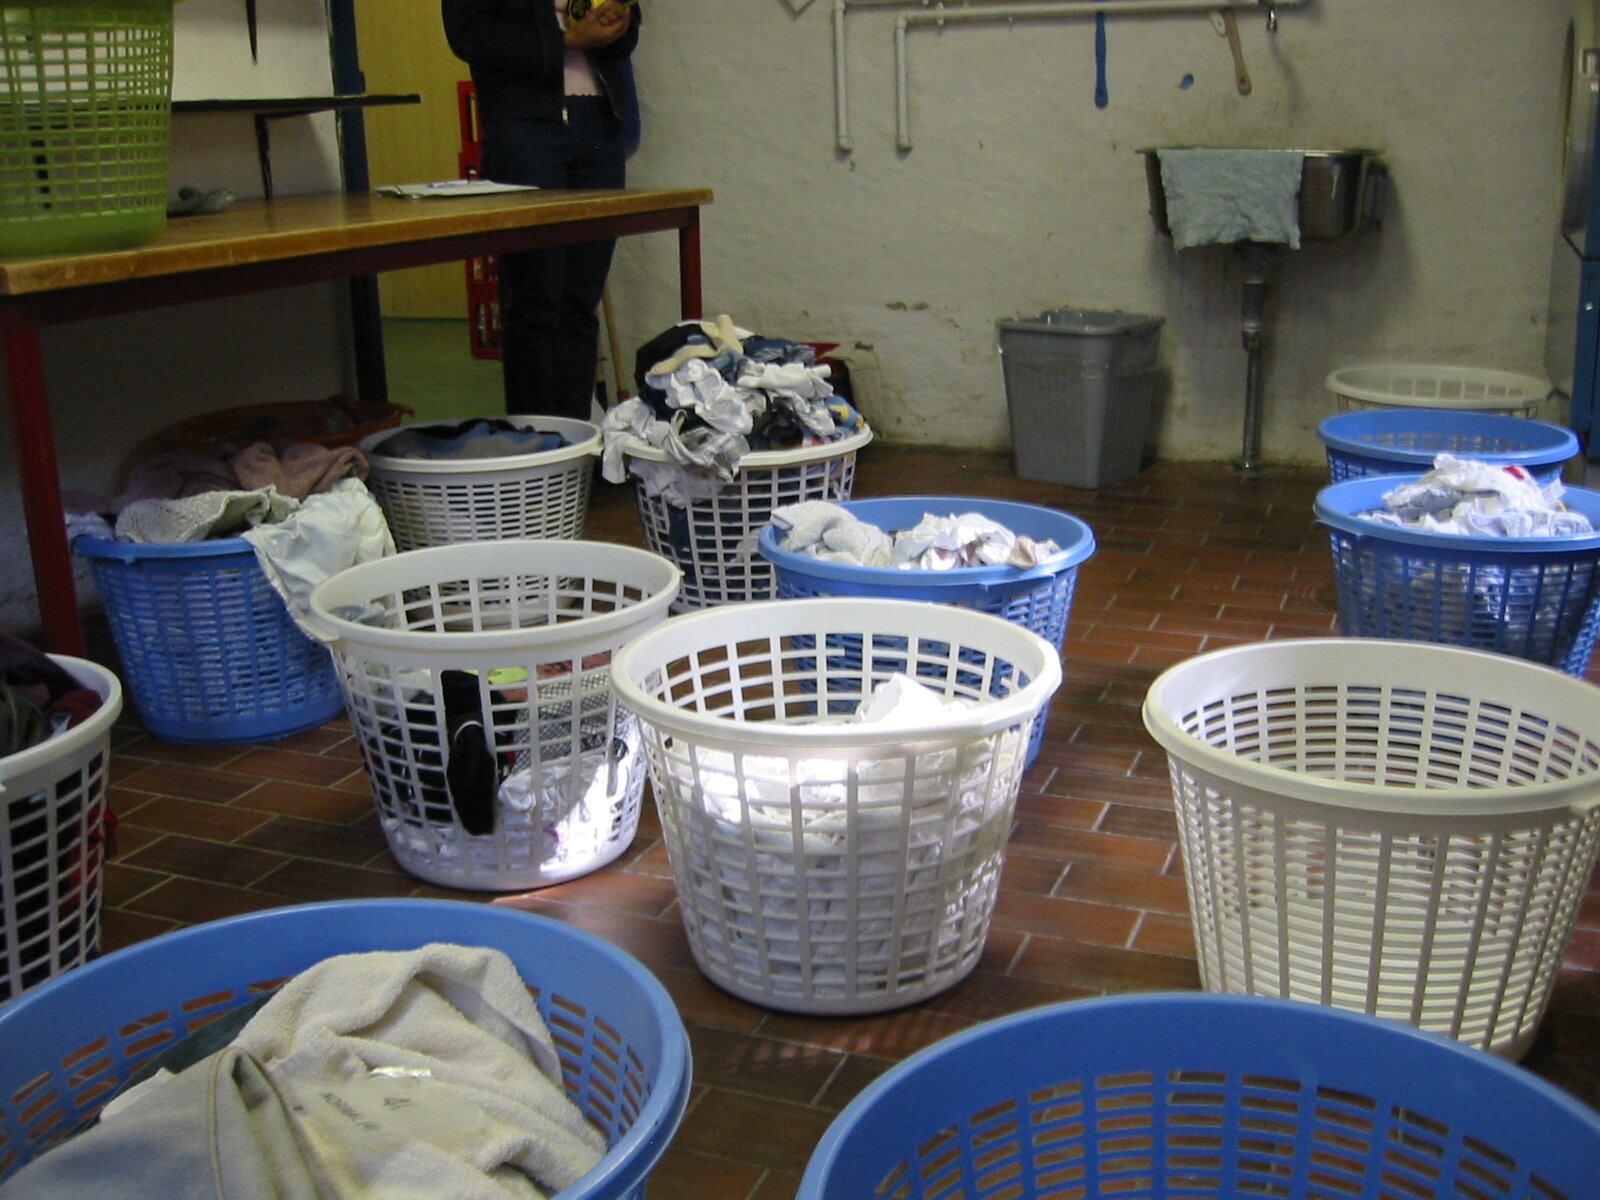 Laundry baskets queued up at Ibsgården